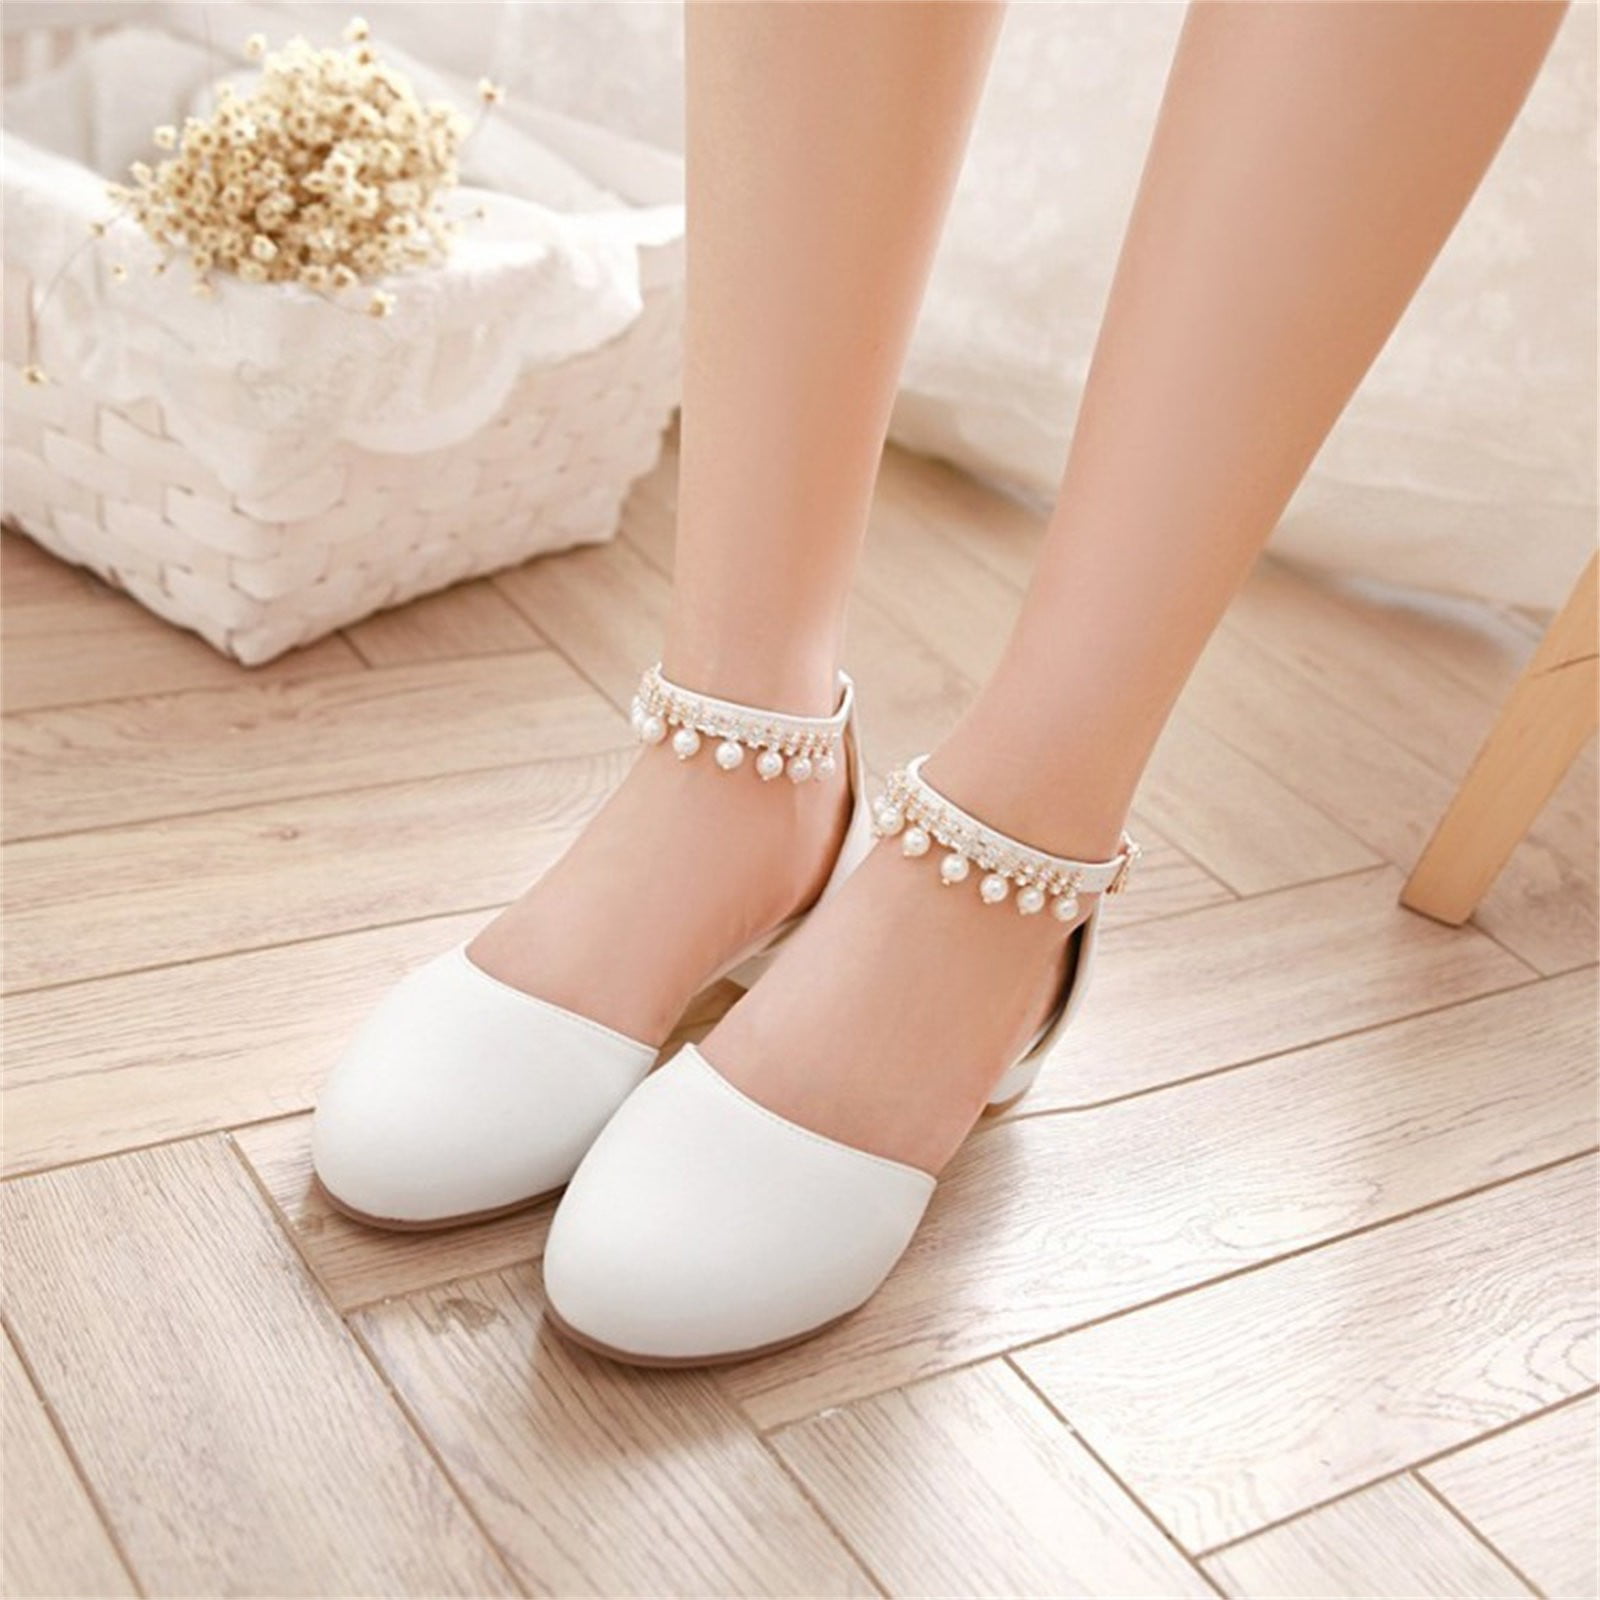 Girls Sandals Grils Dress Shoes Wedding Party Open Toe Glitter High Heels  For | eBay